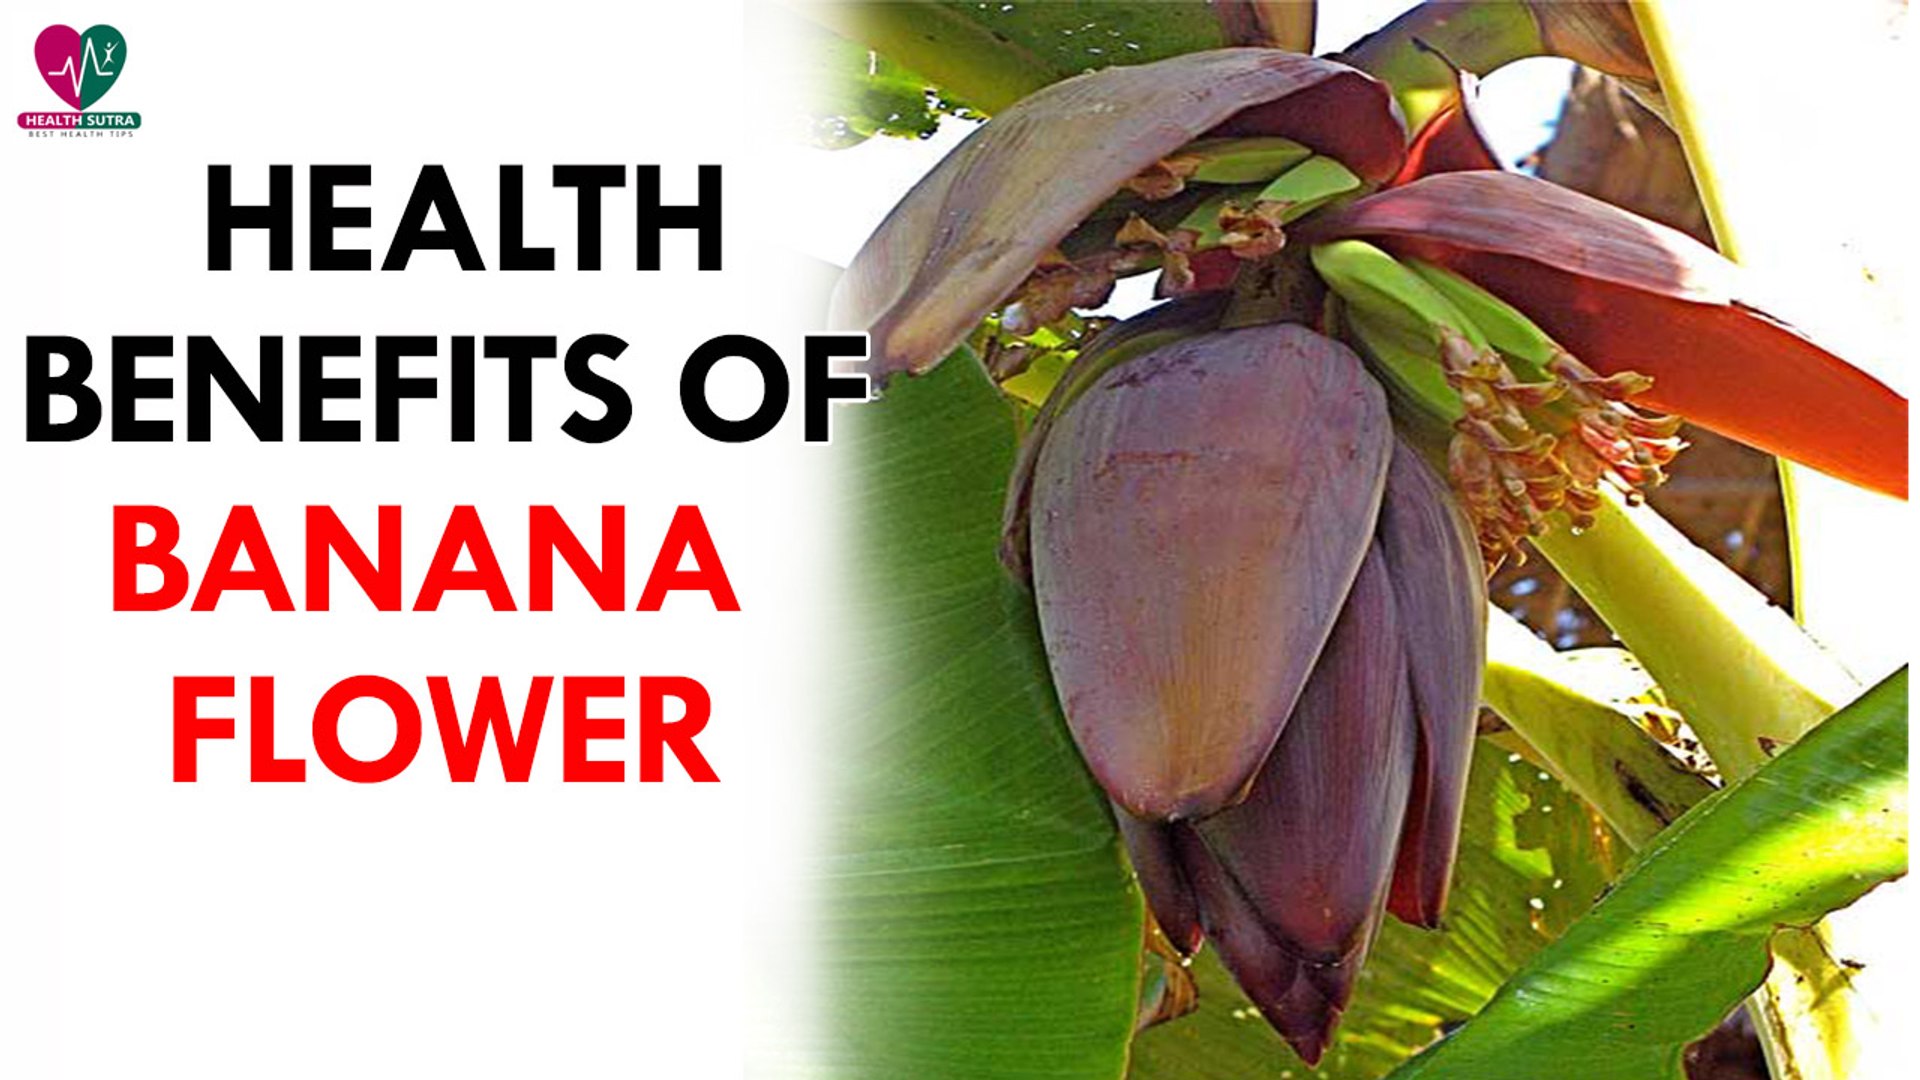 Health Benefits Of Banana Flower Health Sutra Video Dailymotion,Turkey Legs From Disneyland